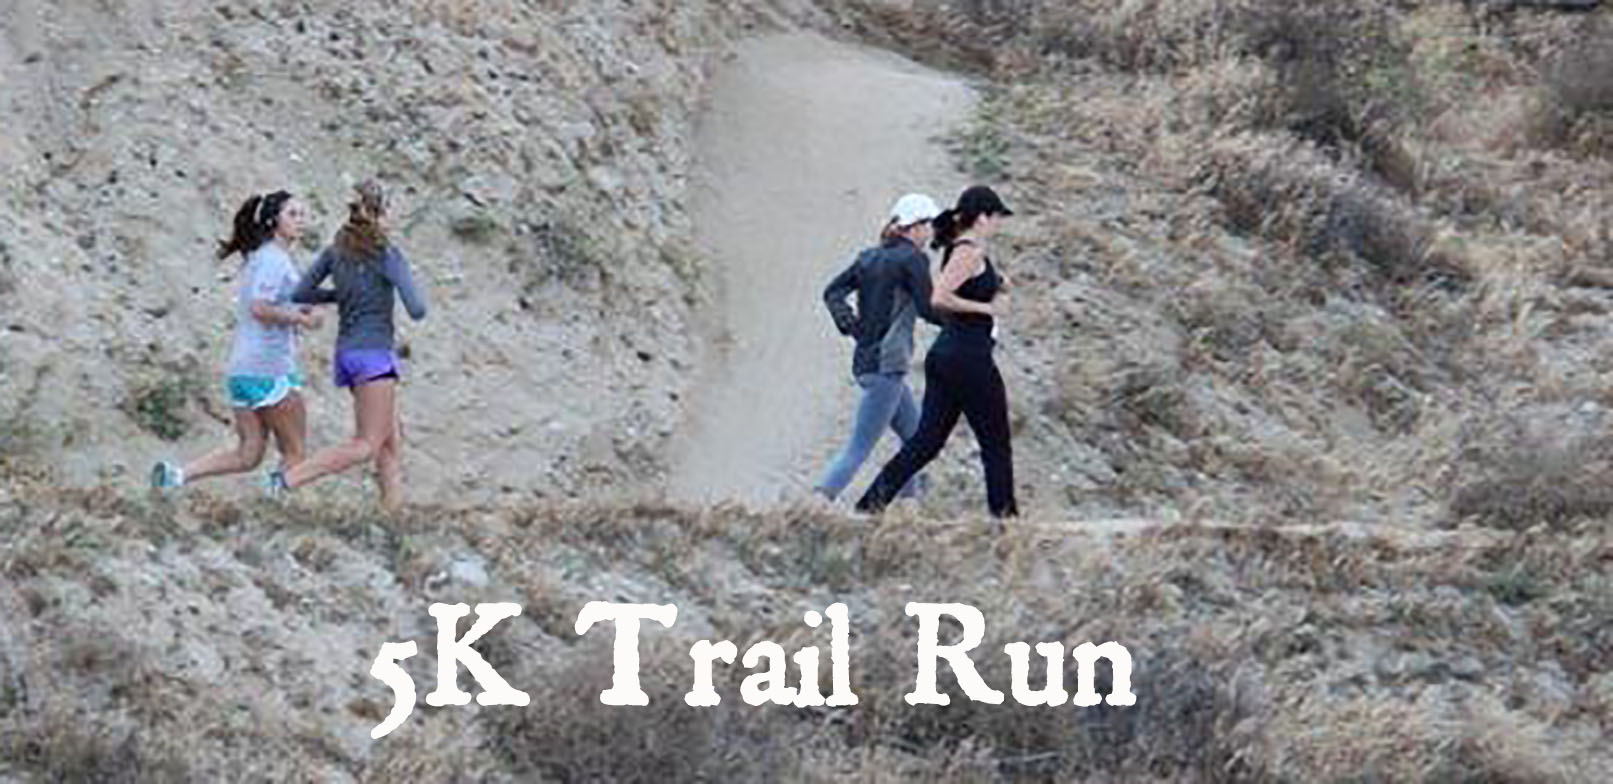 Trail running